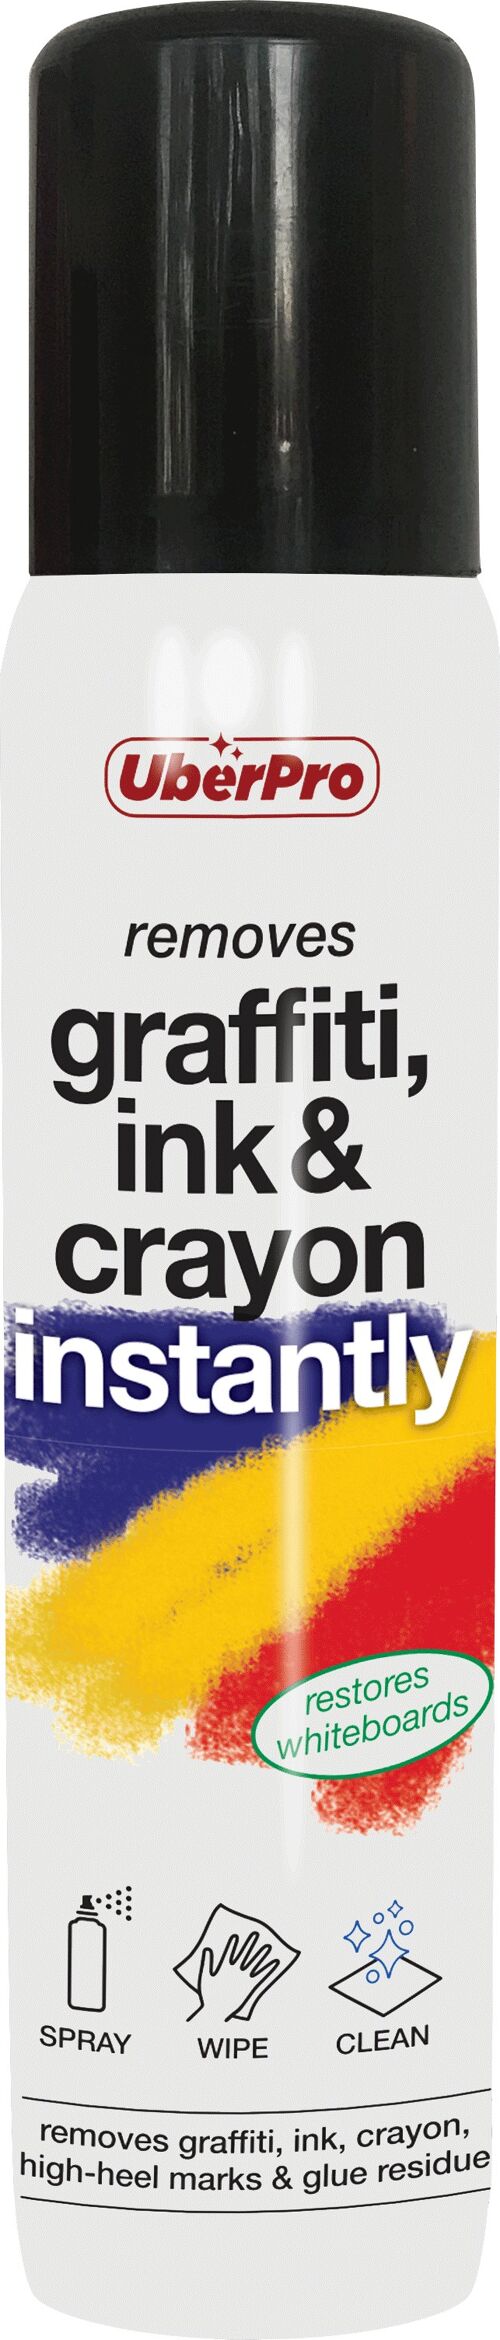 Graffiti, ink & crayon remover 6000 units